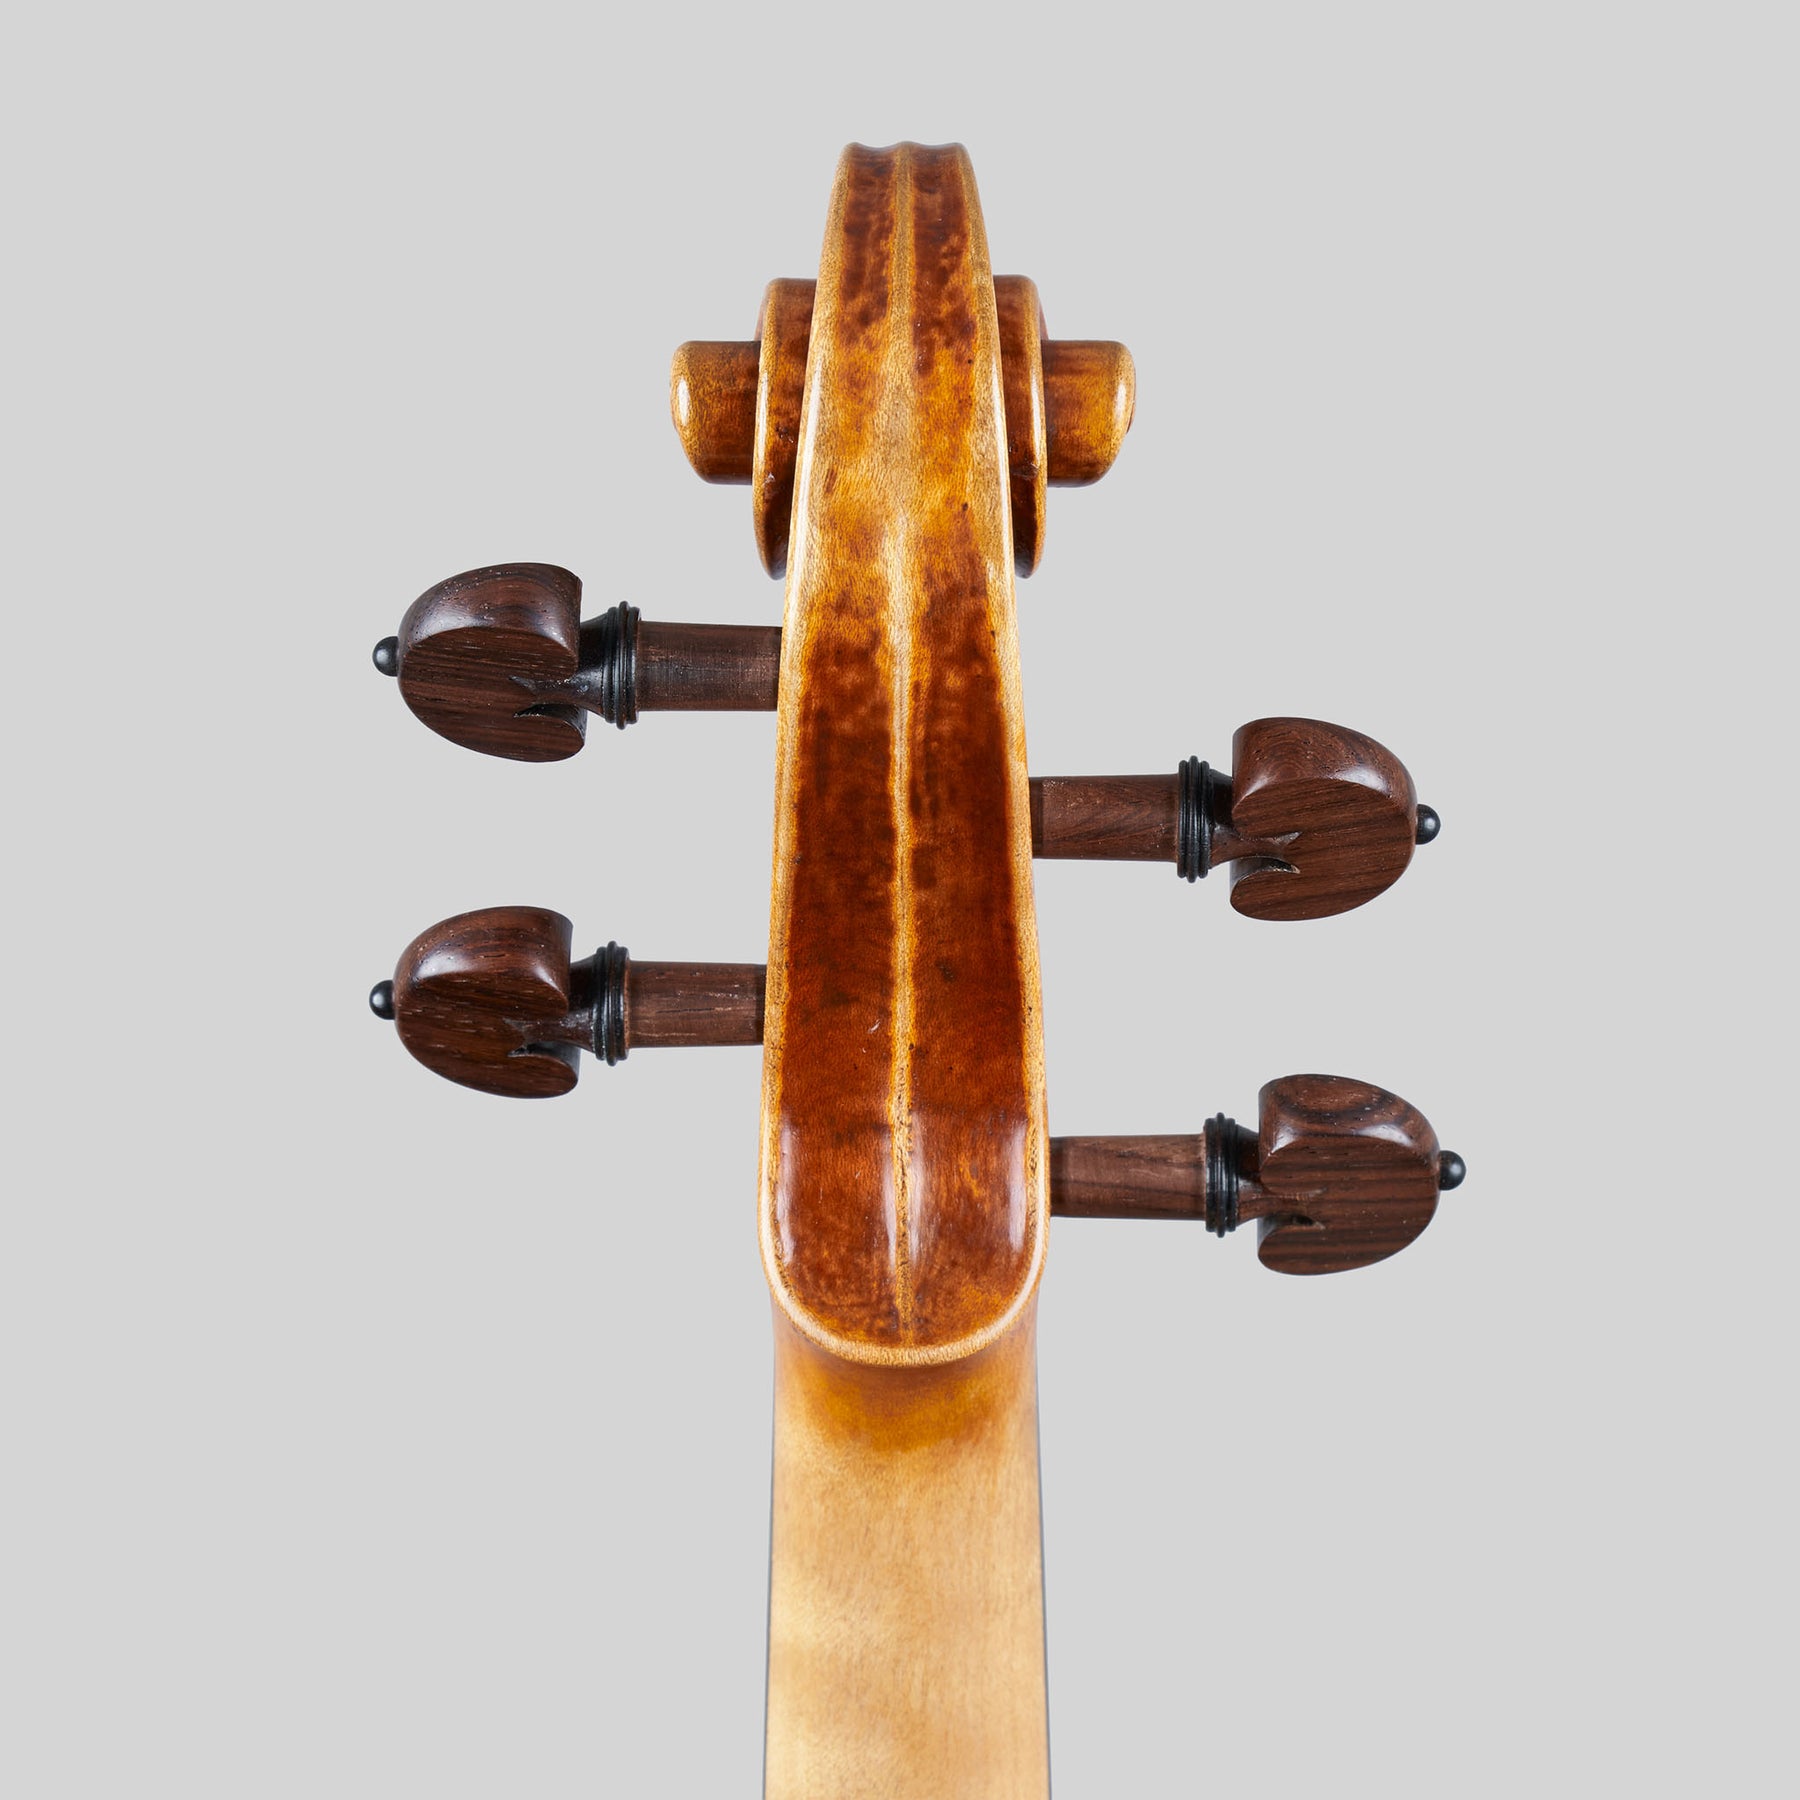 Stefano Gibertoni & Valerio Nalin, Milan "Huberman" Stradivarius Violin 2021